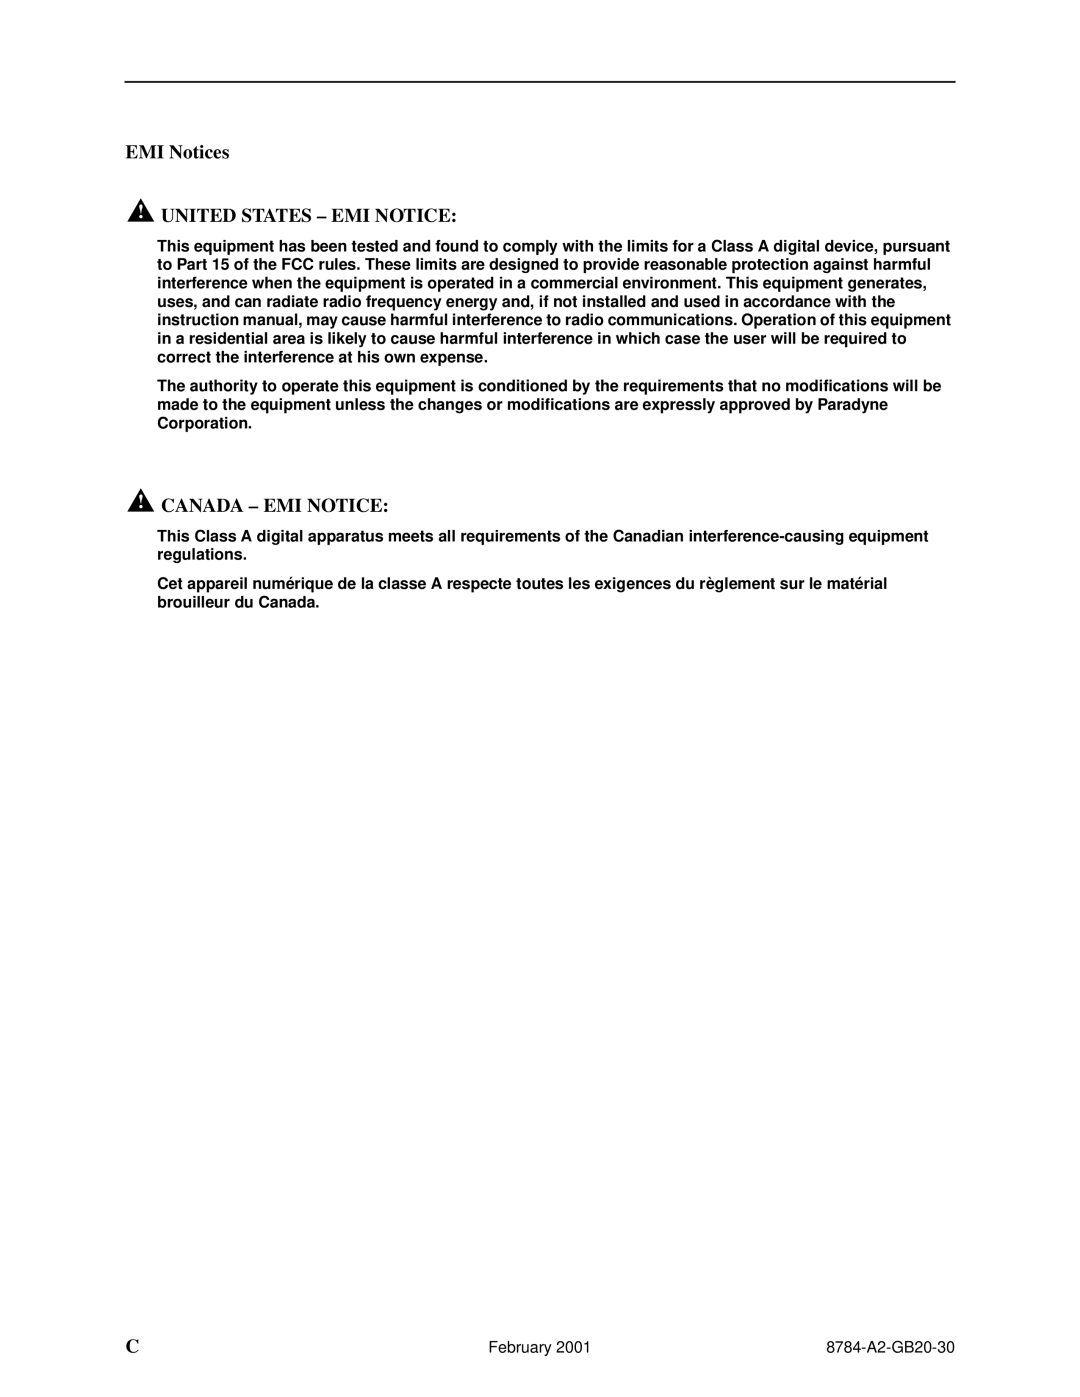 Paradyne 8784 manual EMI Notices UNITED STATES - EMI NOTICE, Canada - Emi Notice 